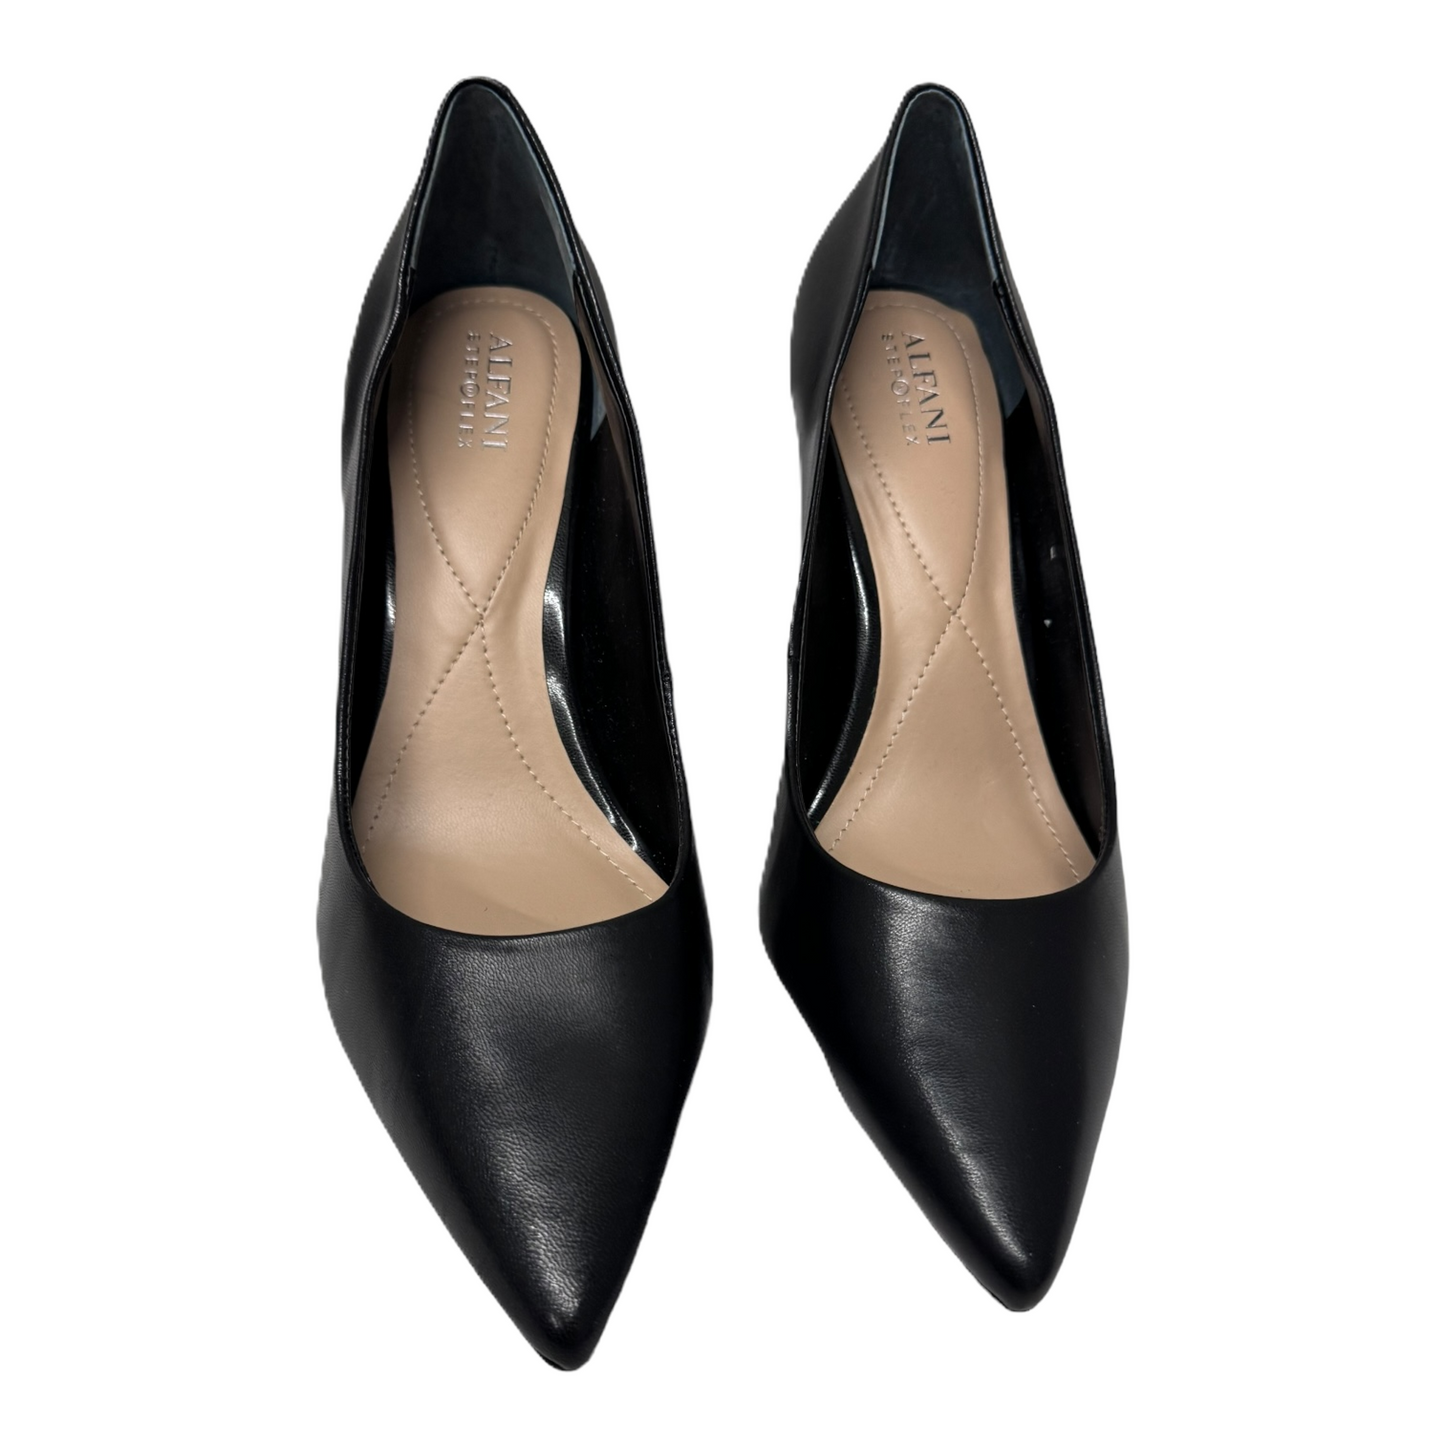 Shoes Heels Stiletto By Alfani  Size: 9.5